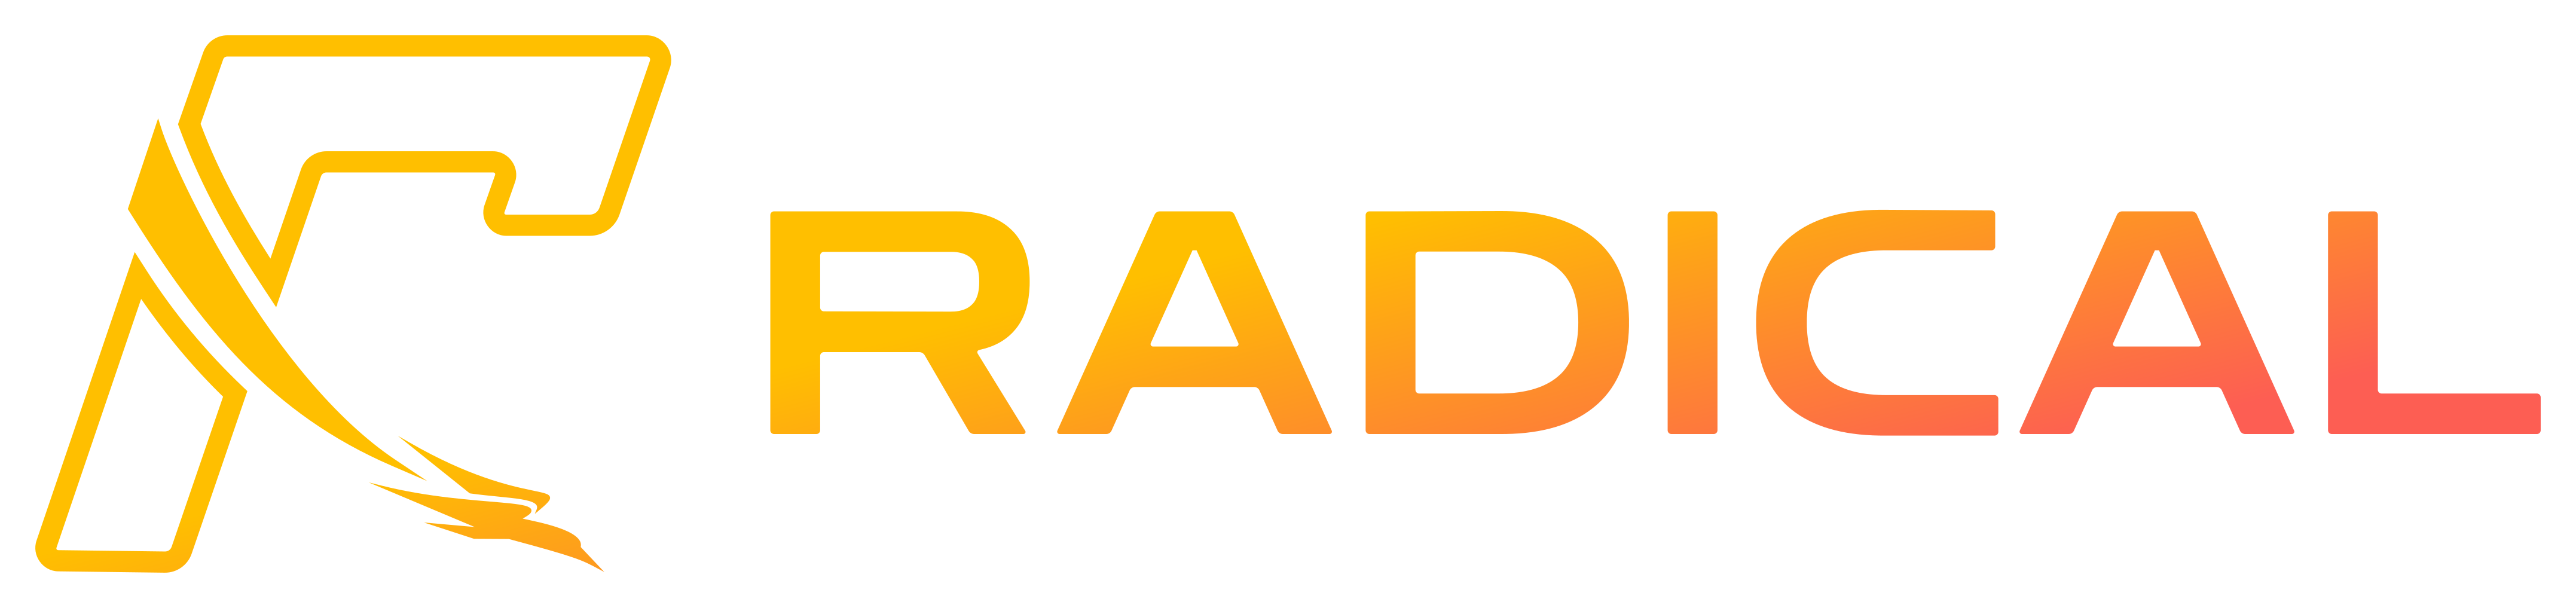 Radical_logo